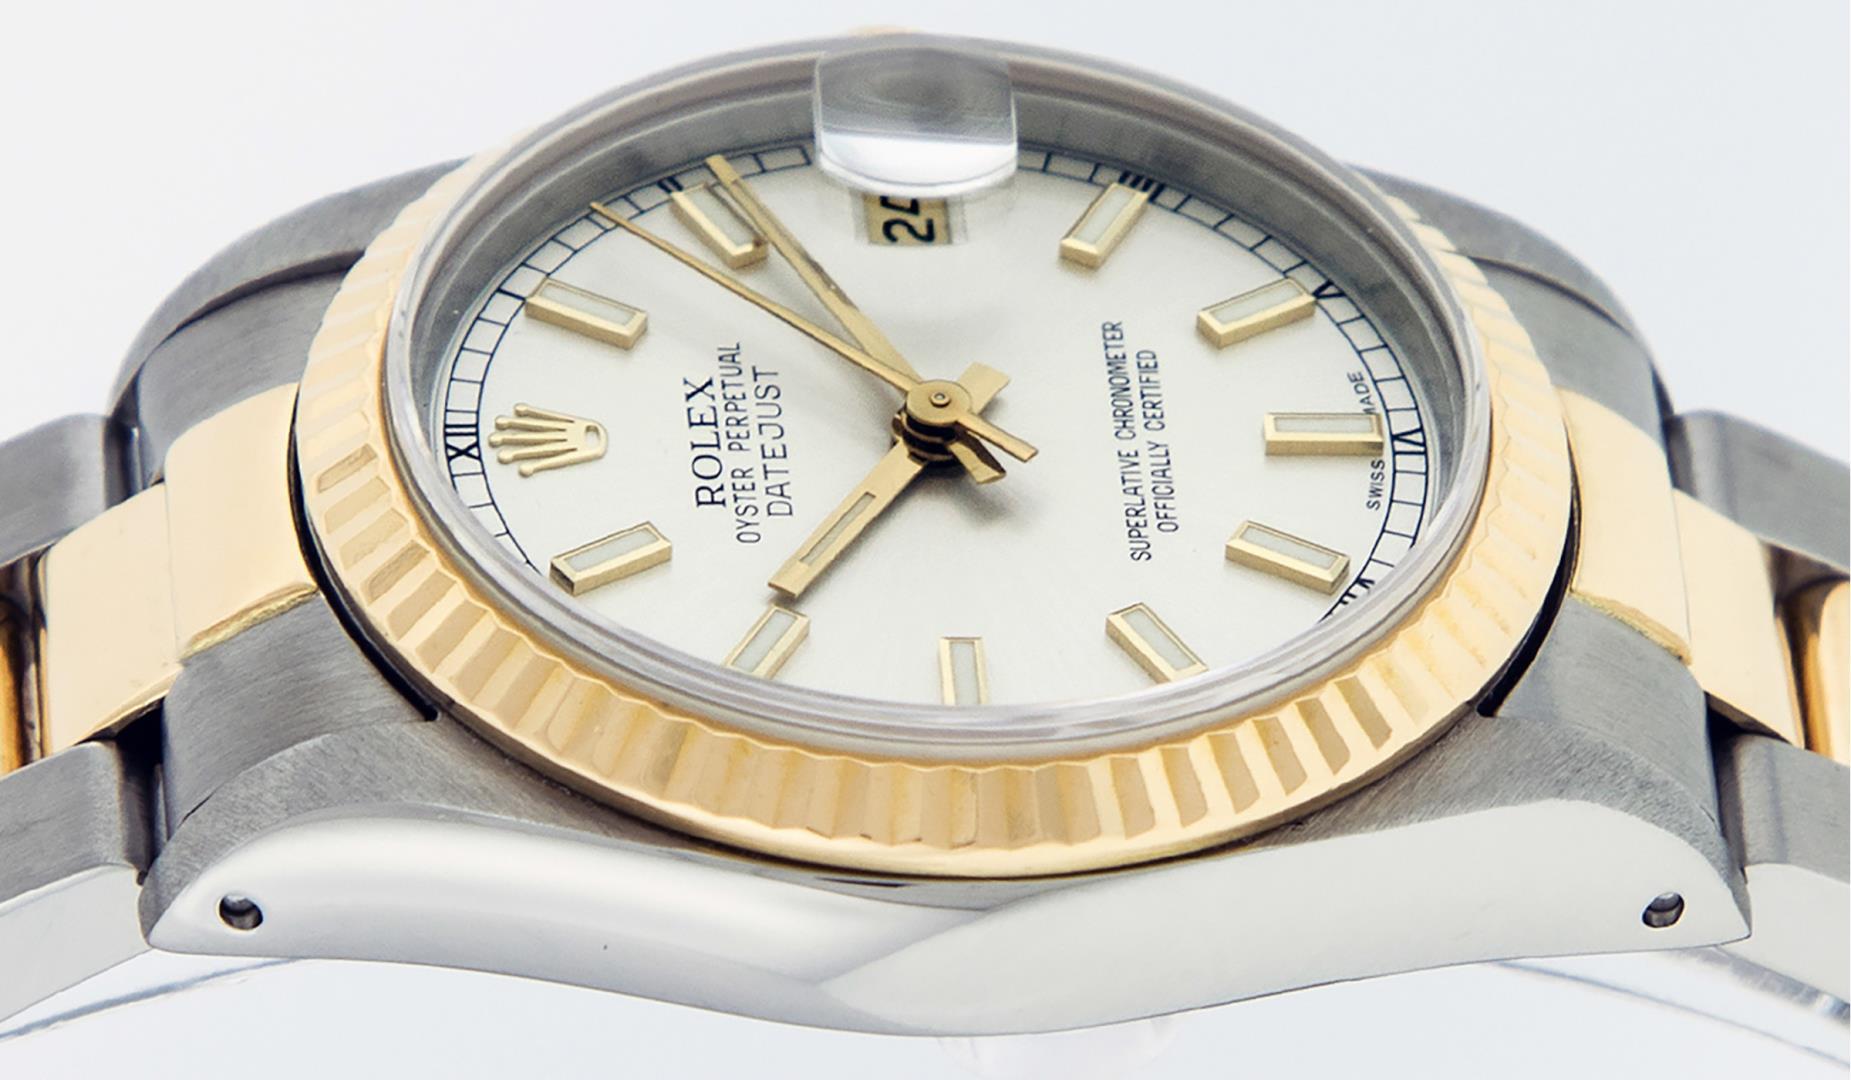 Rolex Ladies Midsize Two Tone Silver Index Datejust Wristwatch